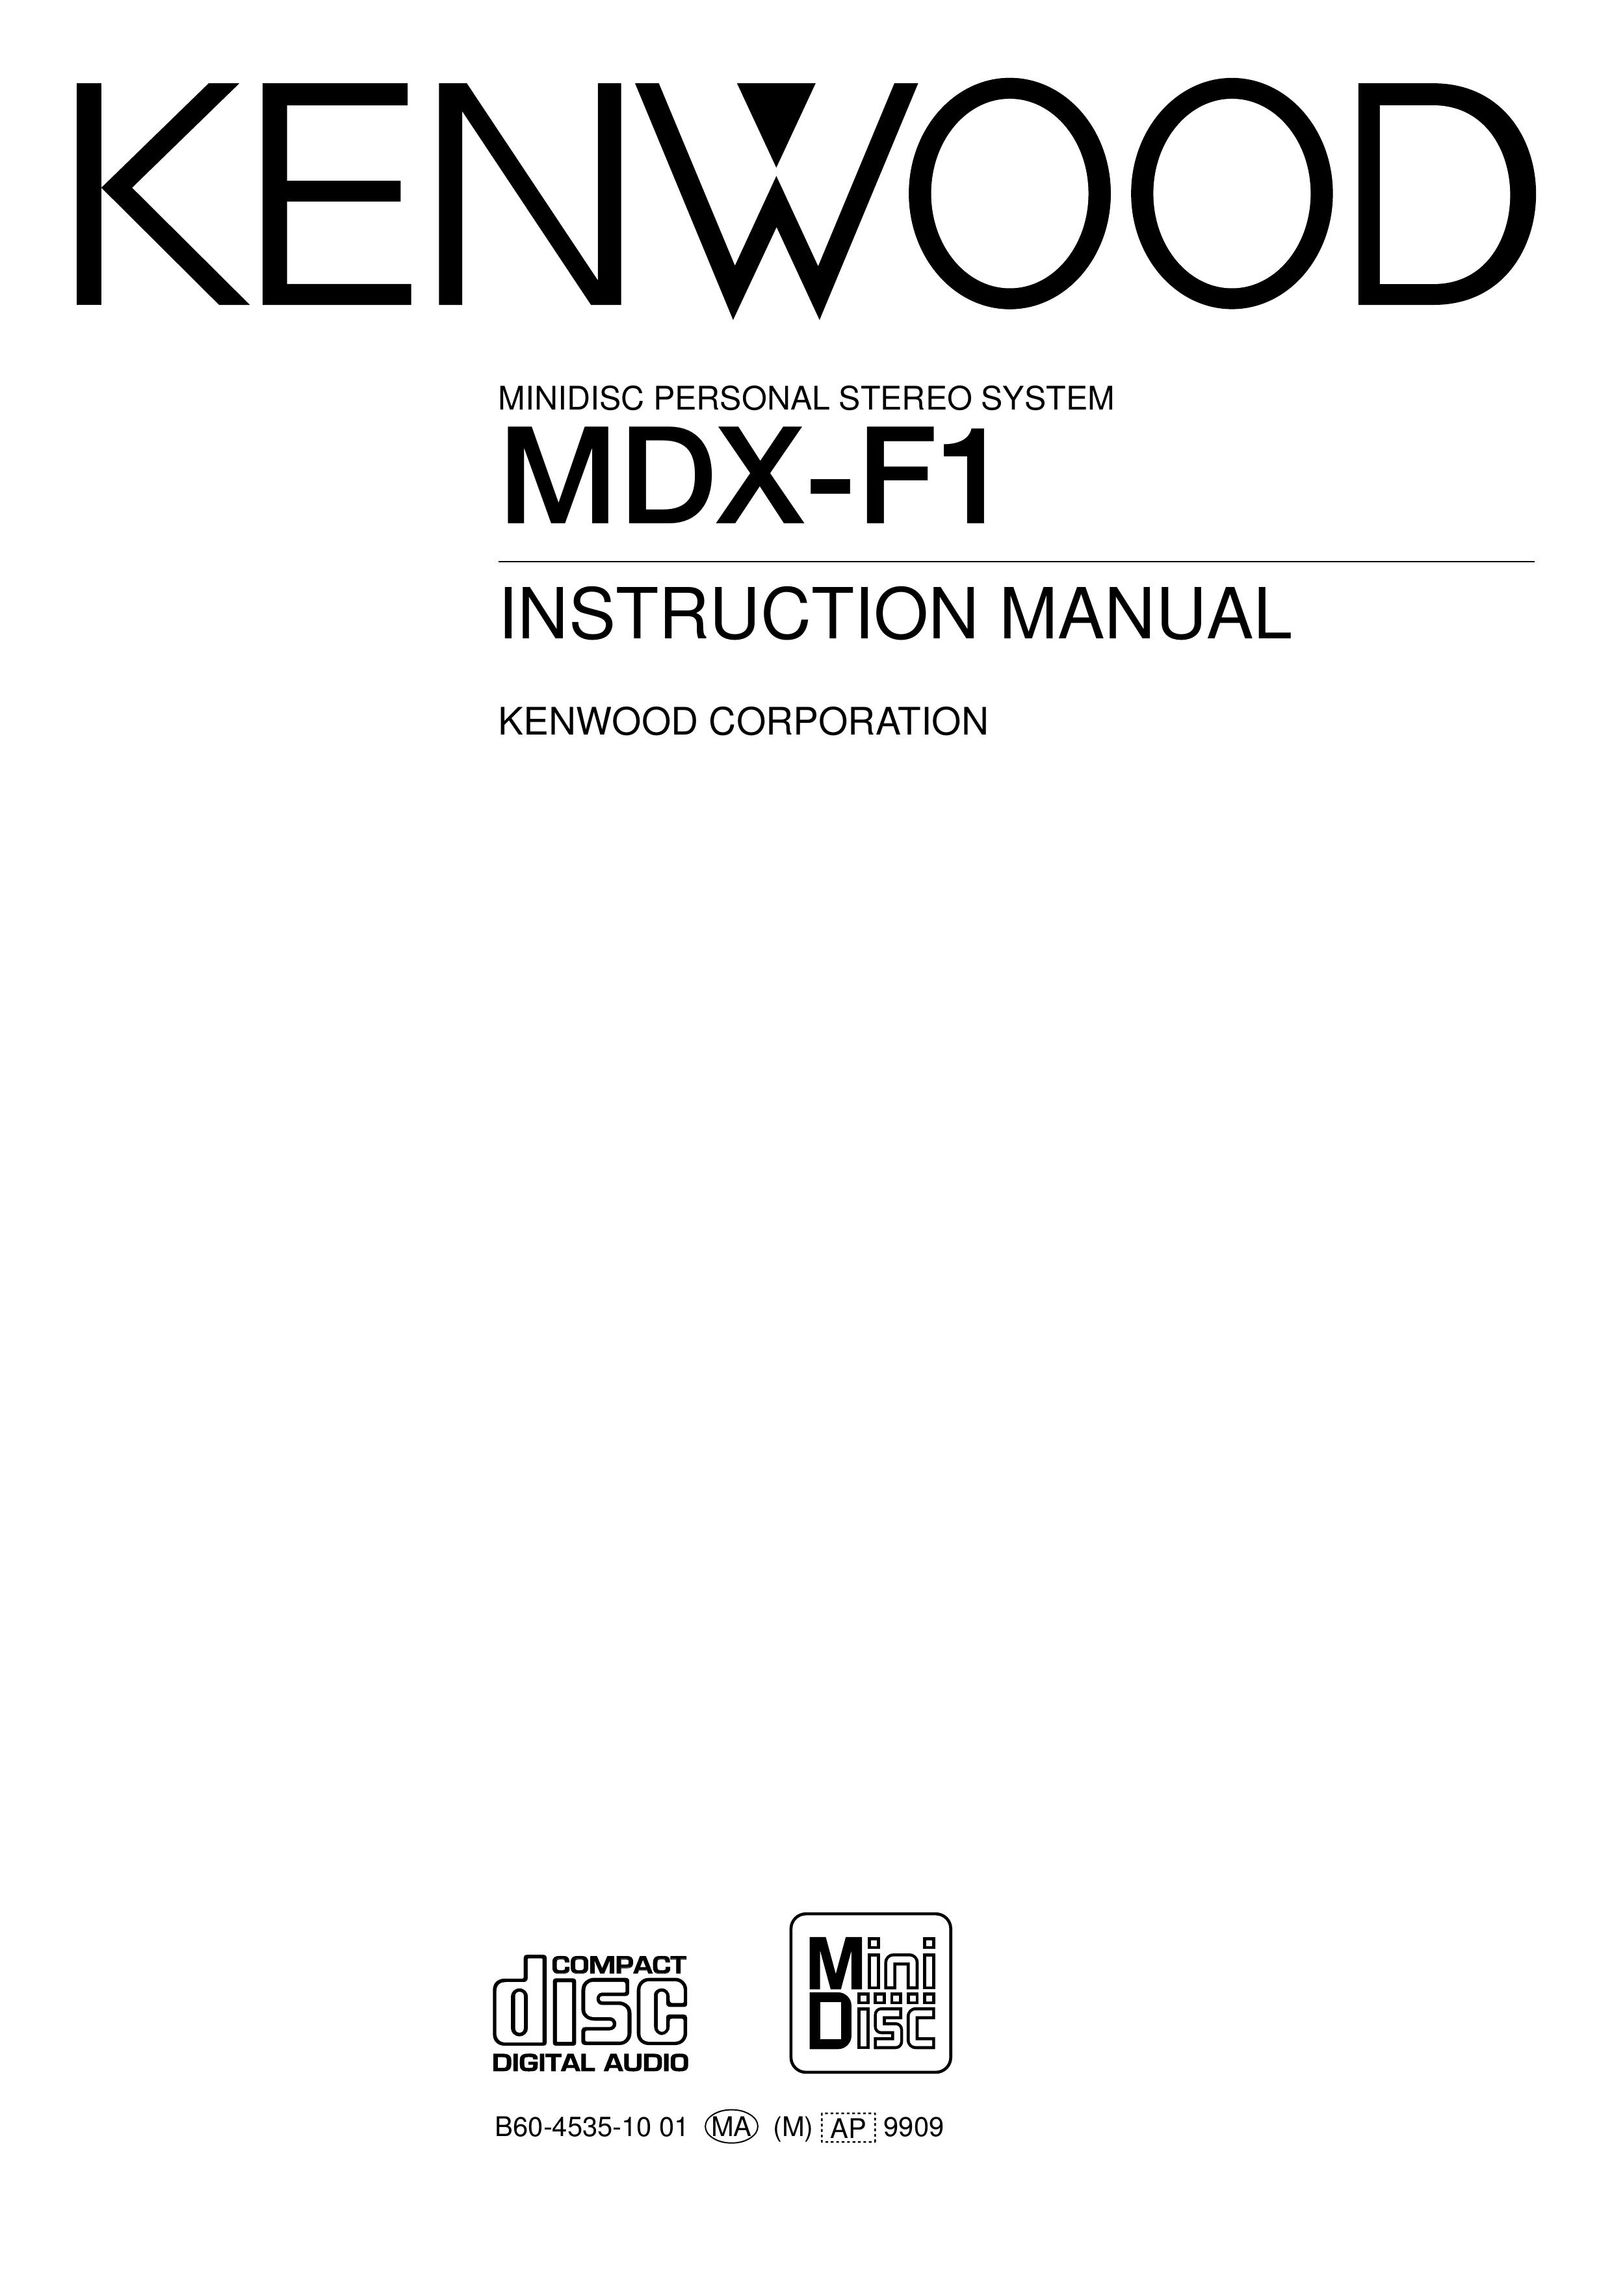 Kenwood MDX-F1 MiniDisc Player User Manual